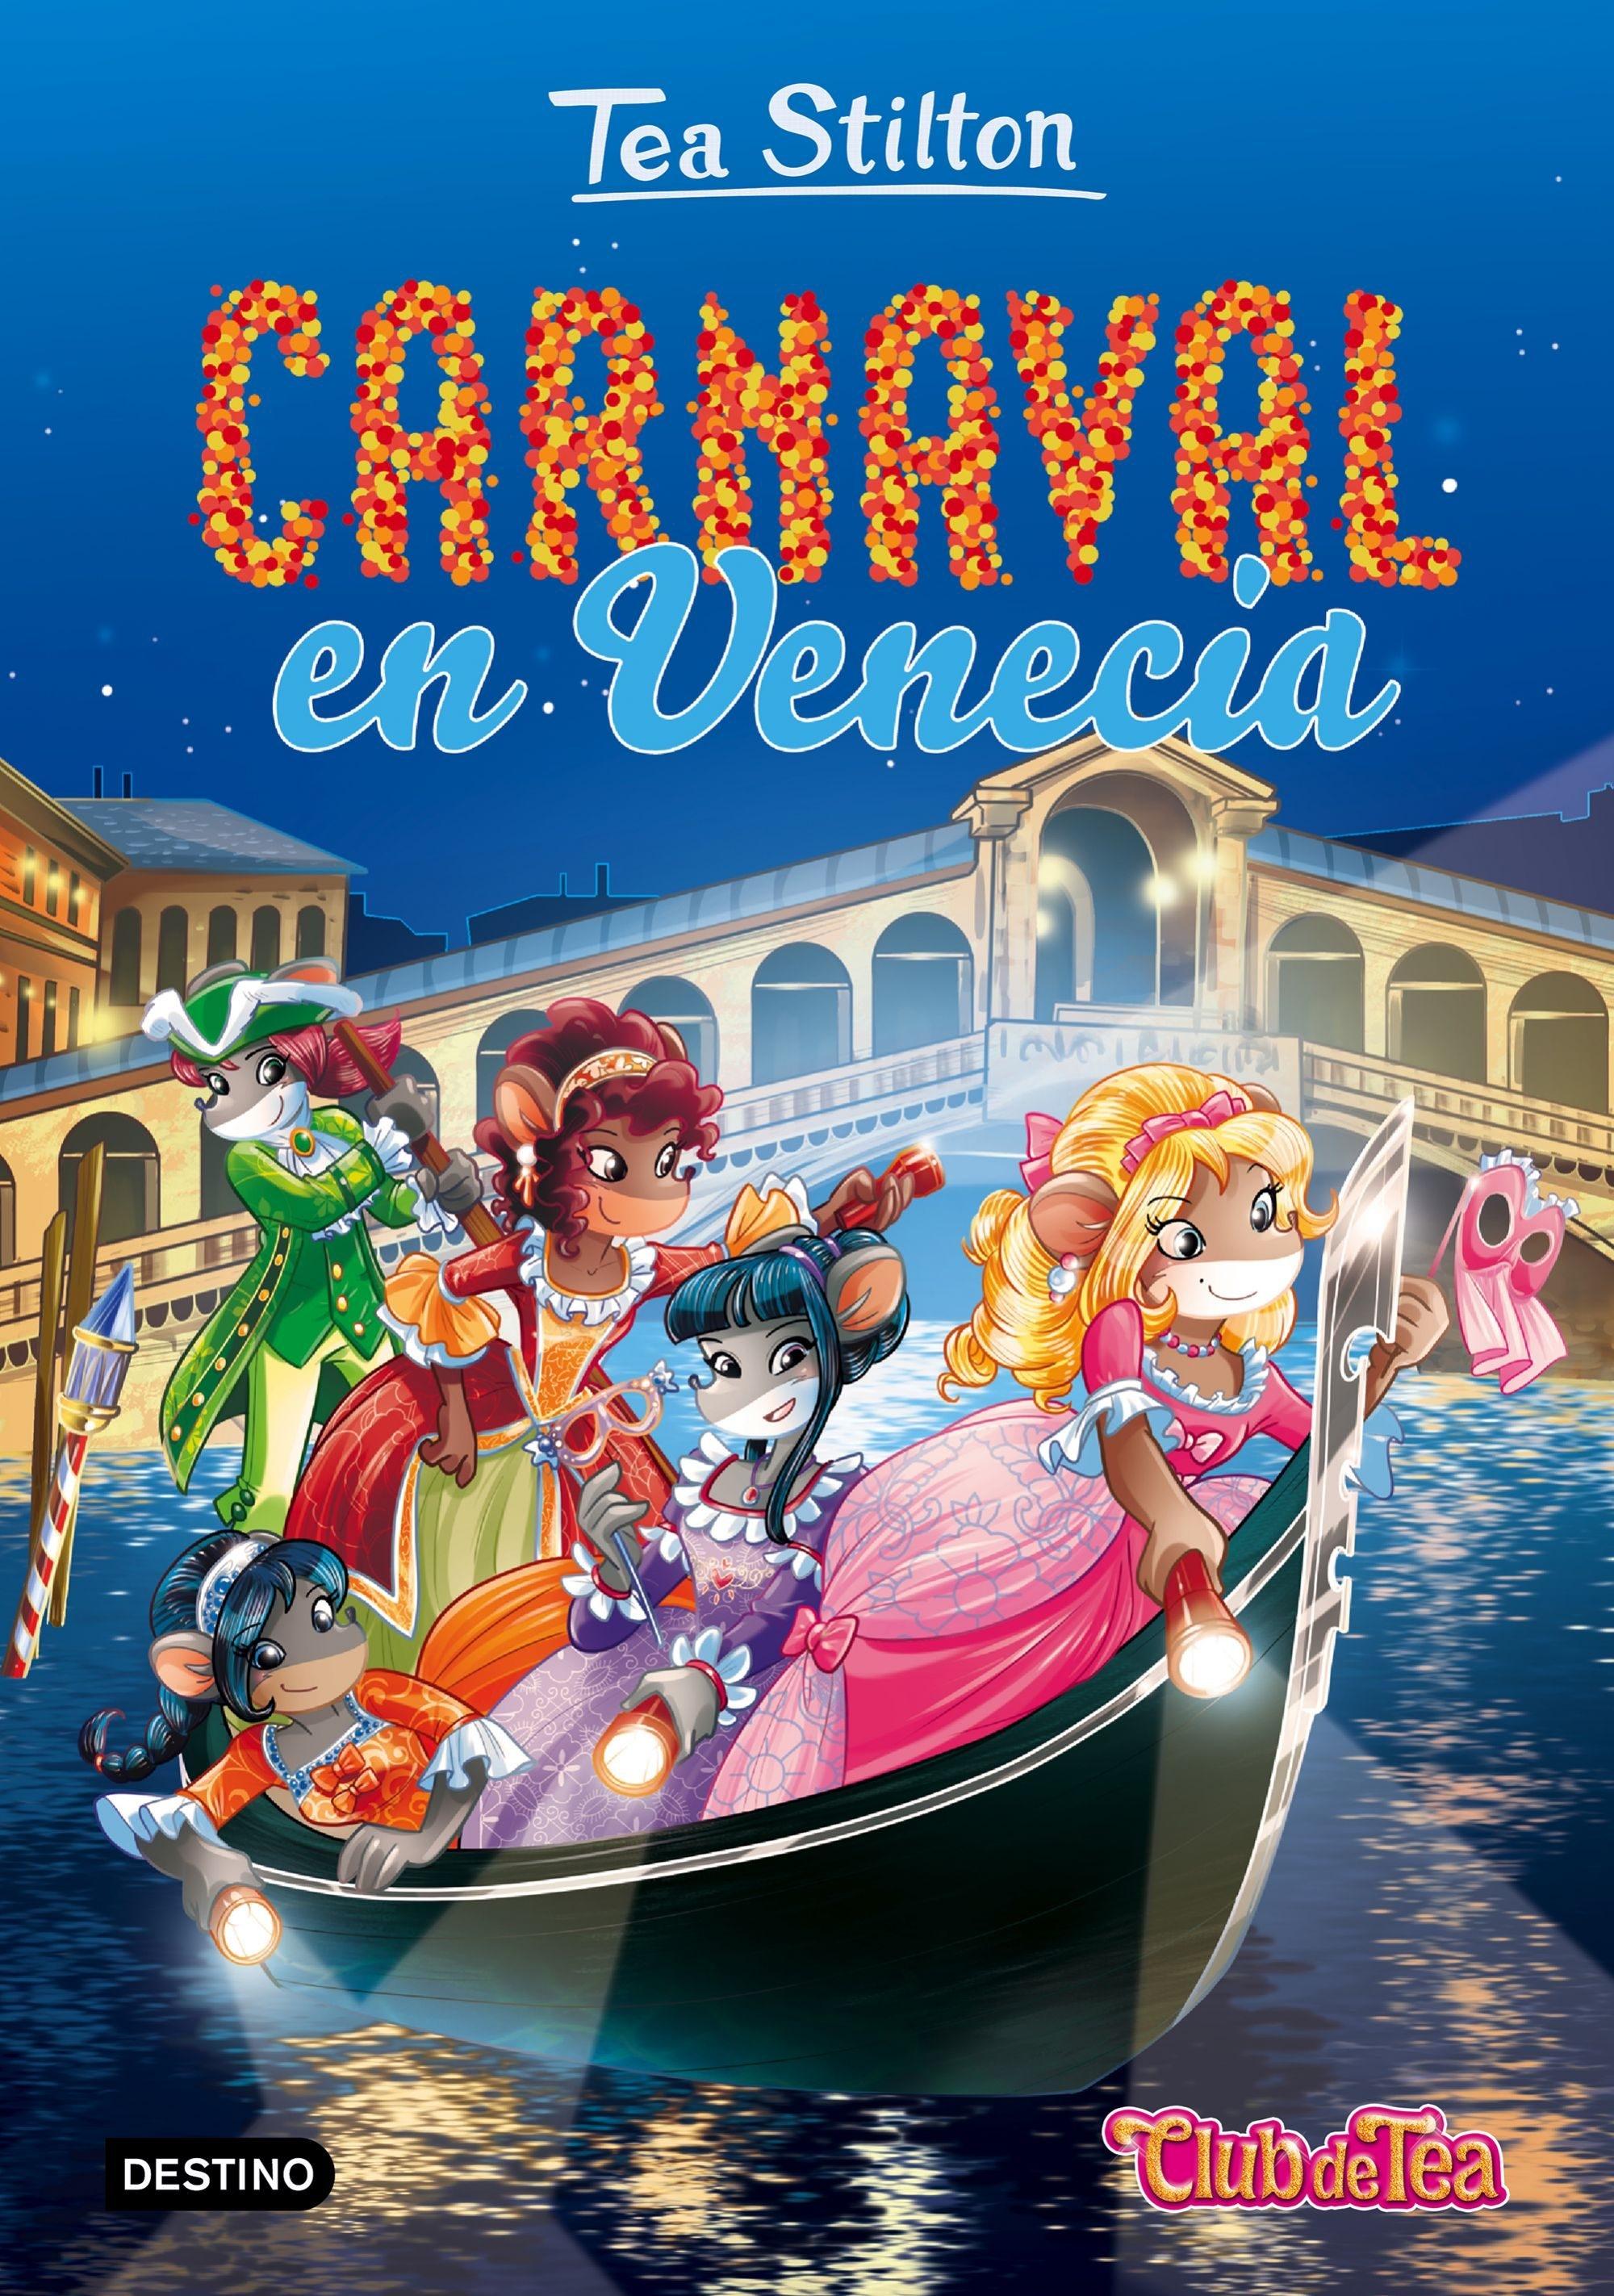 Carnaval en Venecia "Tea Stilton 25". 